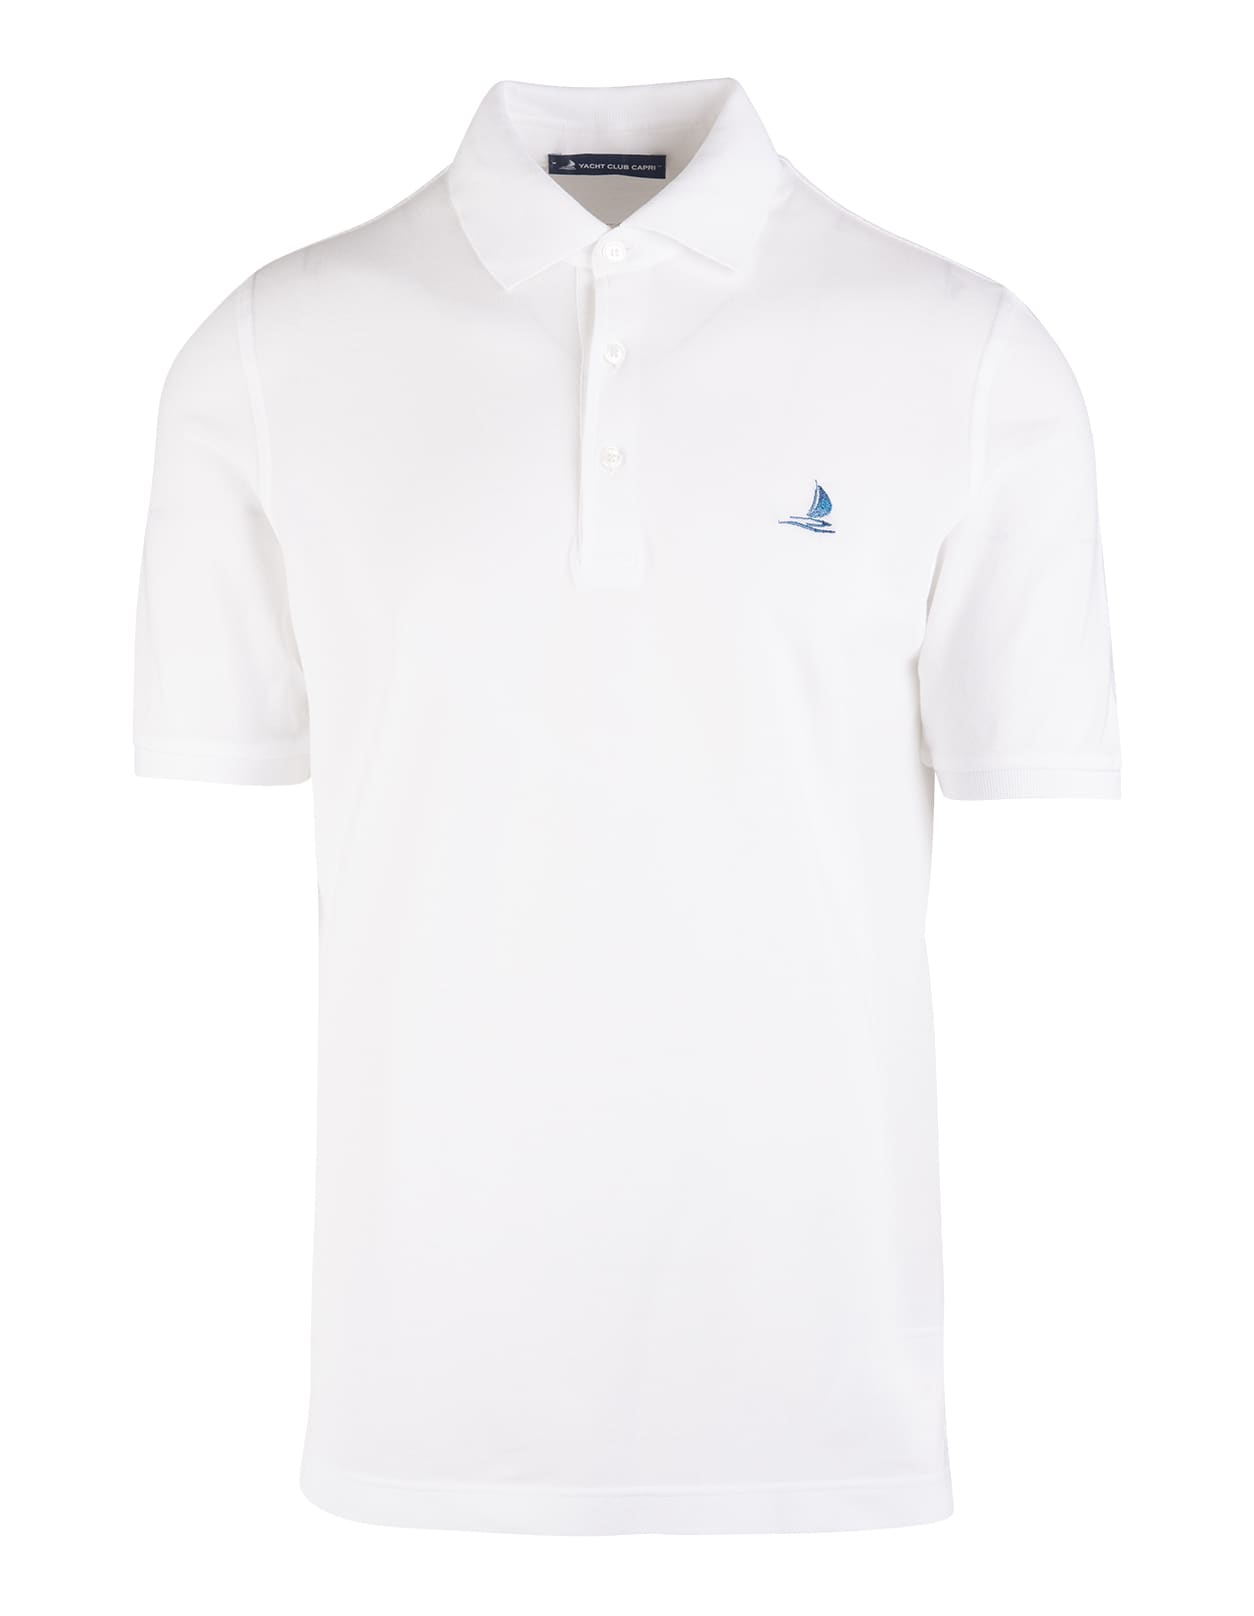 Fedeli Man - White Pique Polo Shirt With Blue Yacht Club Capri Logo